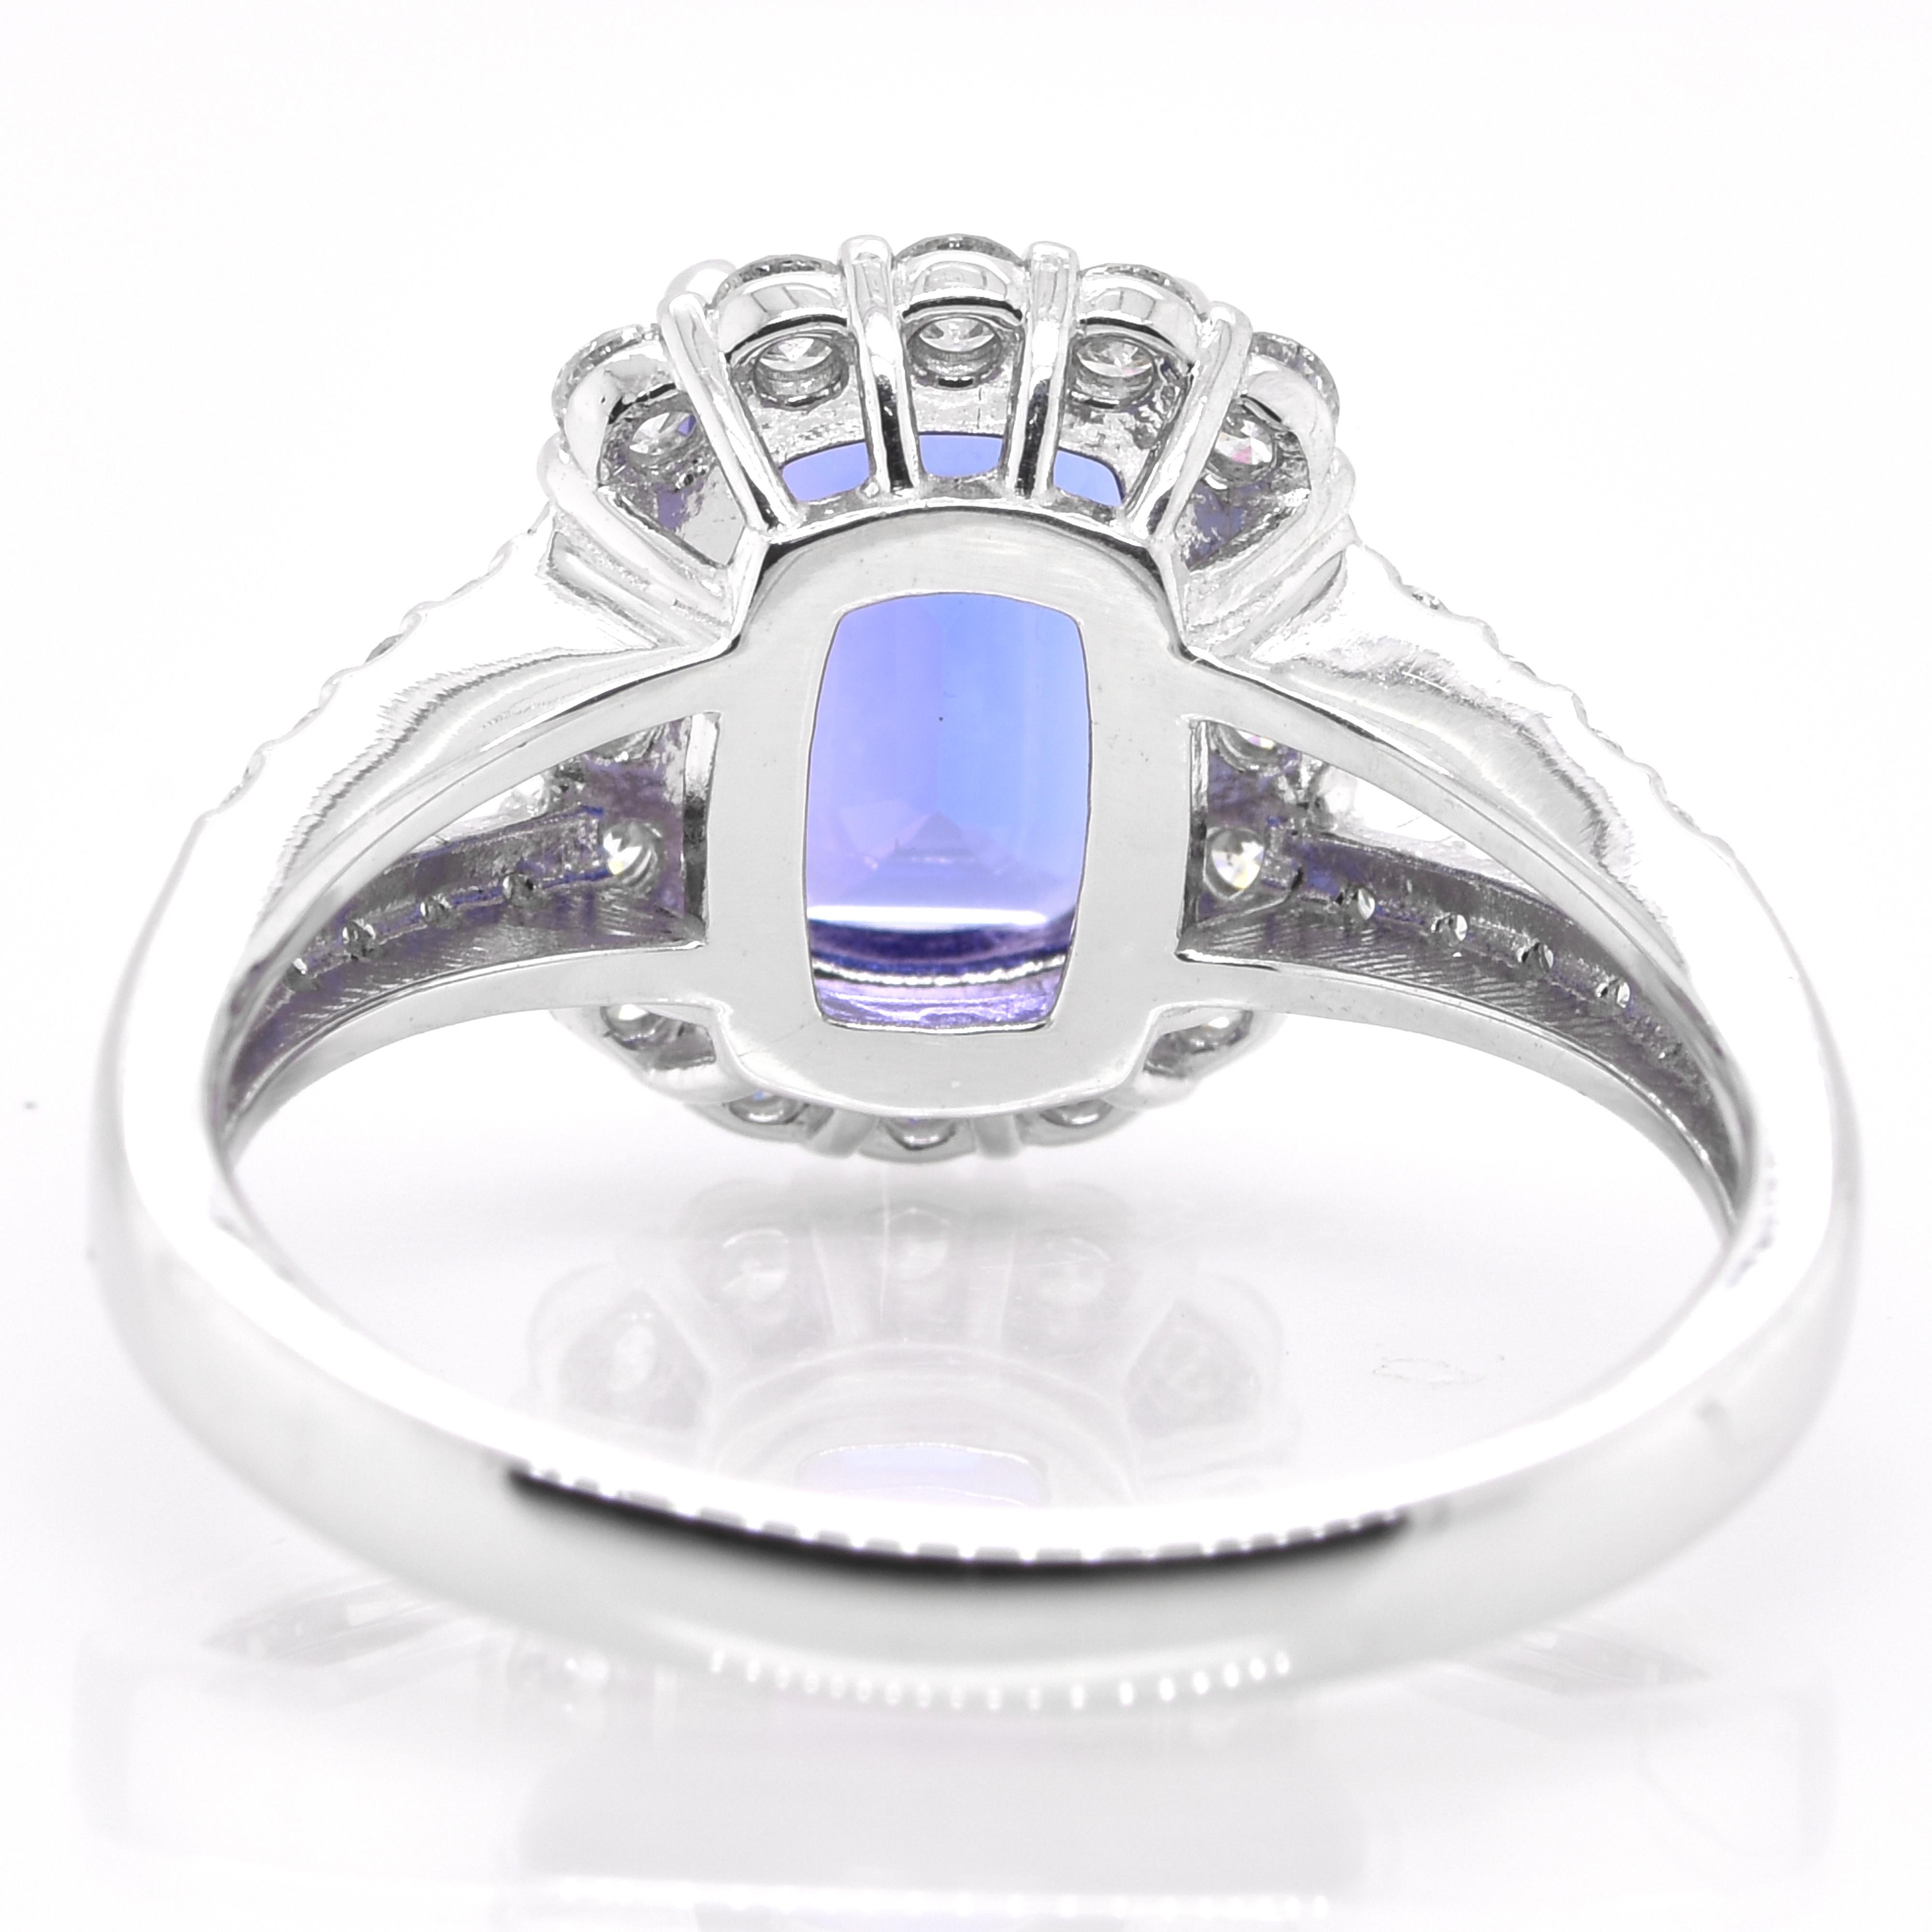 Modern 1.43 Carat Natural Octagon-Cut Tanzanite and Diamond Ring Set in Platinum